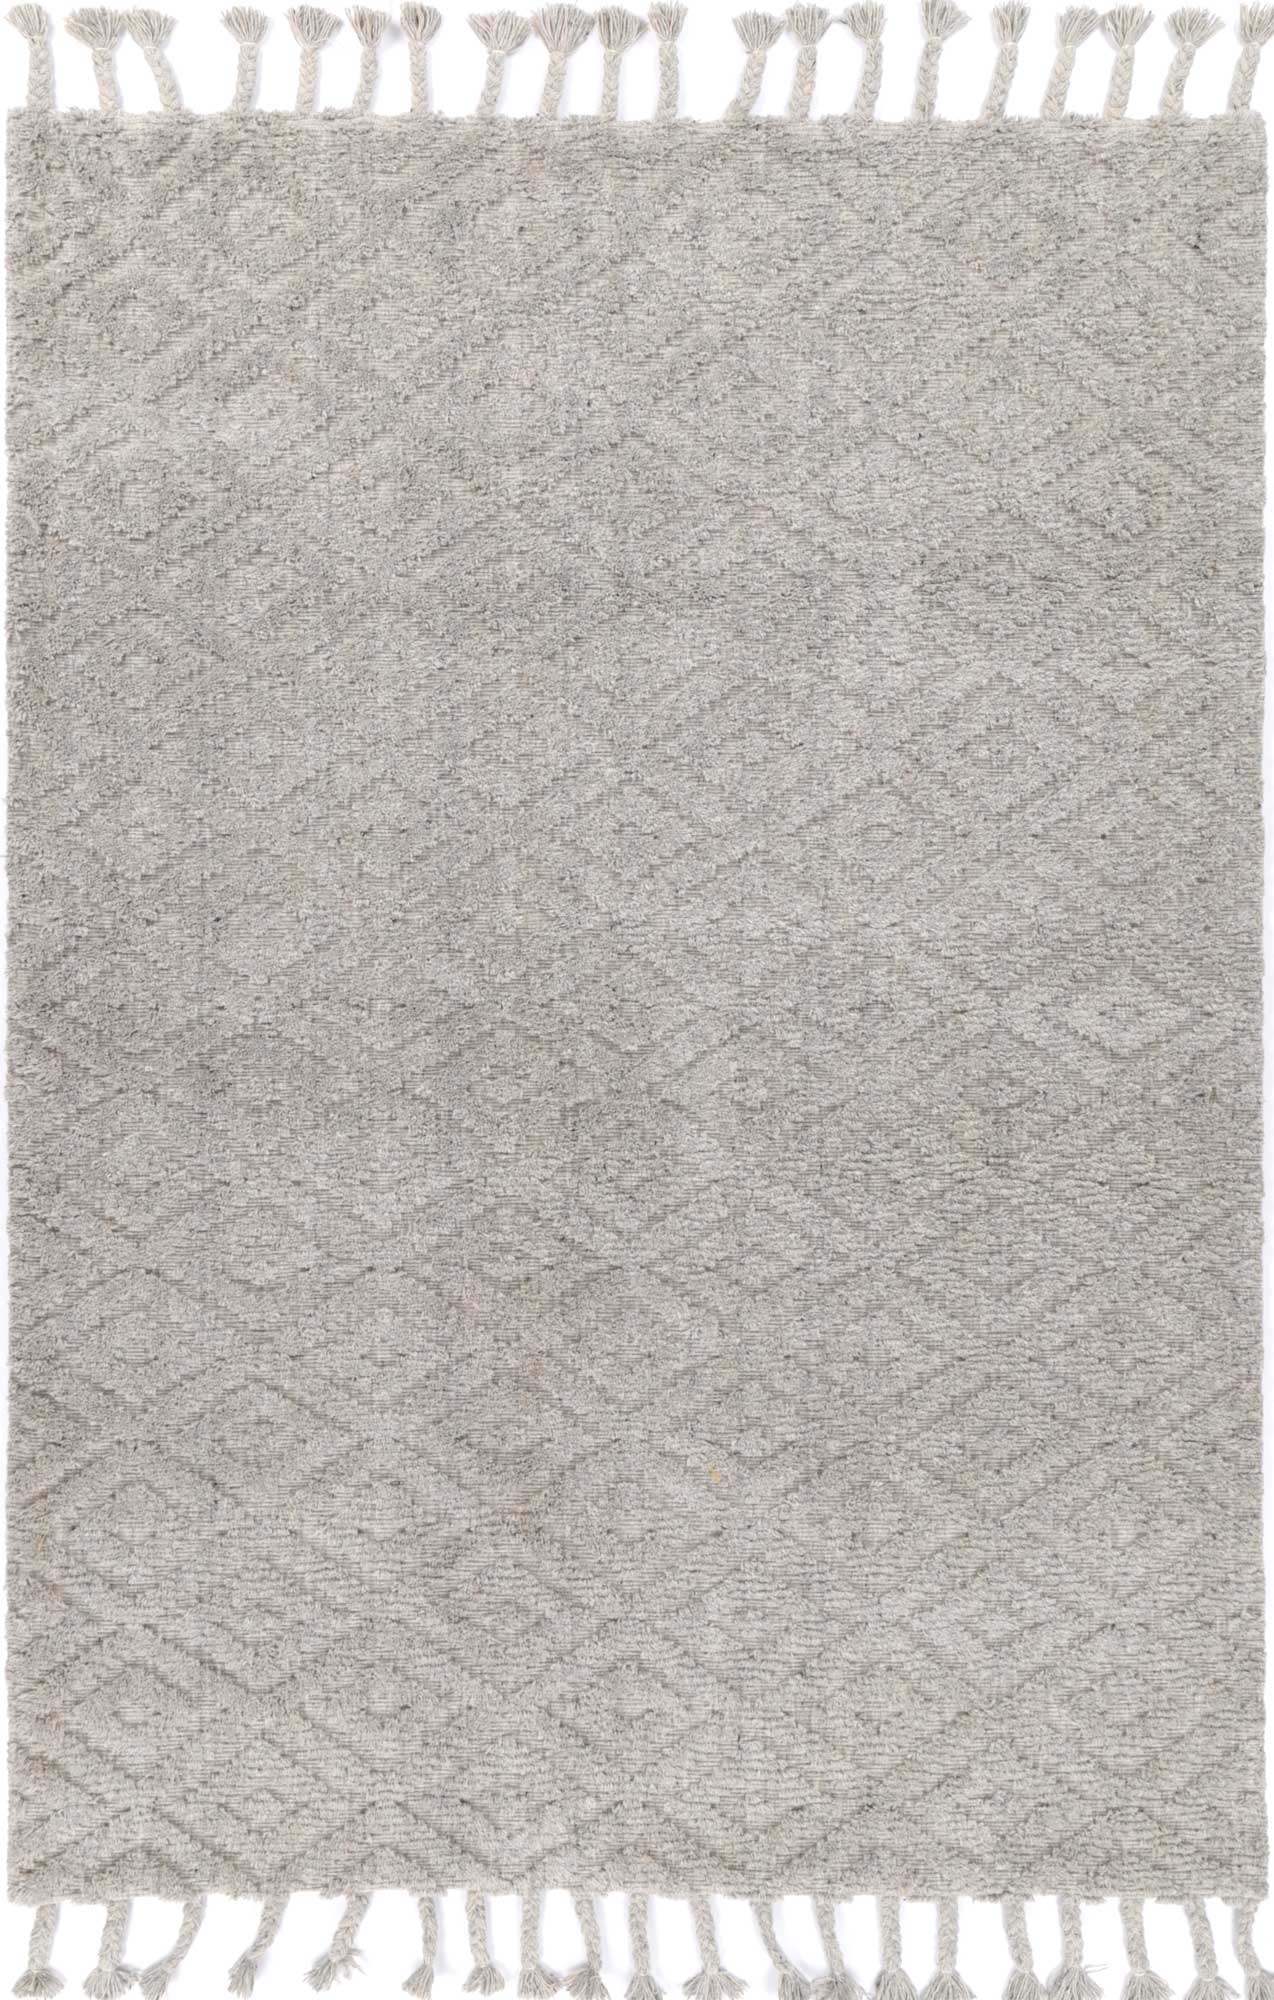 Goa Diamond Wool Blend Grey Rug